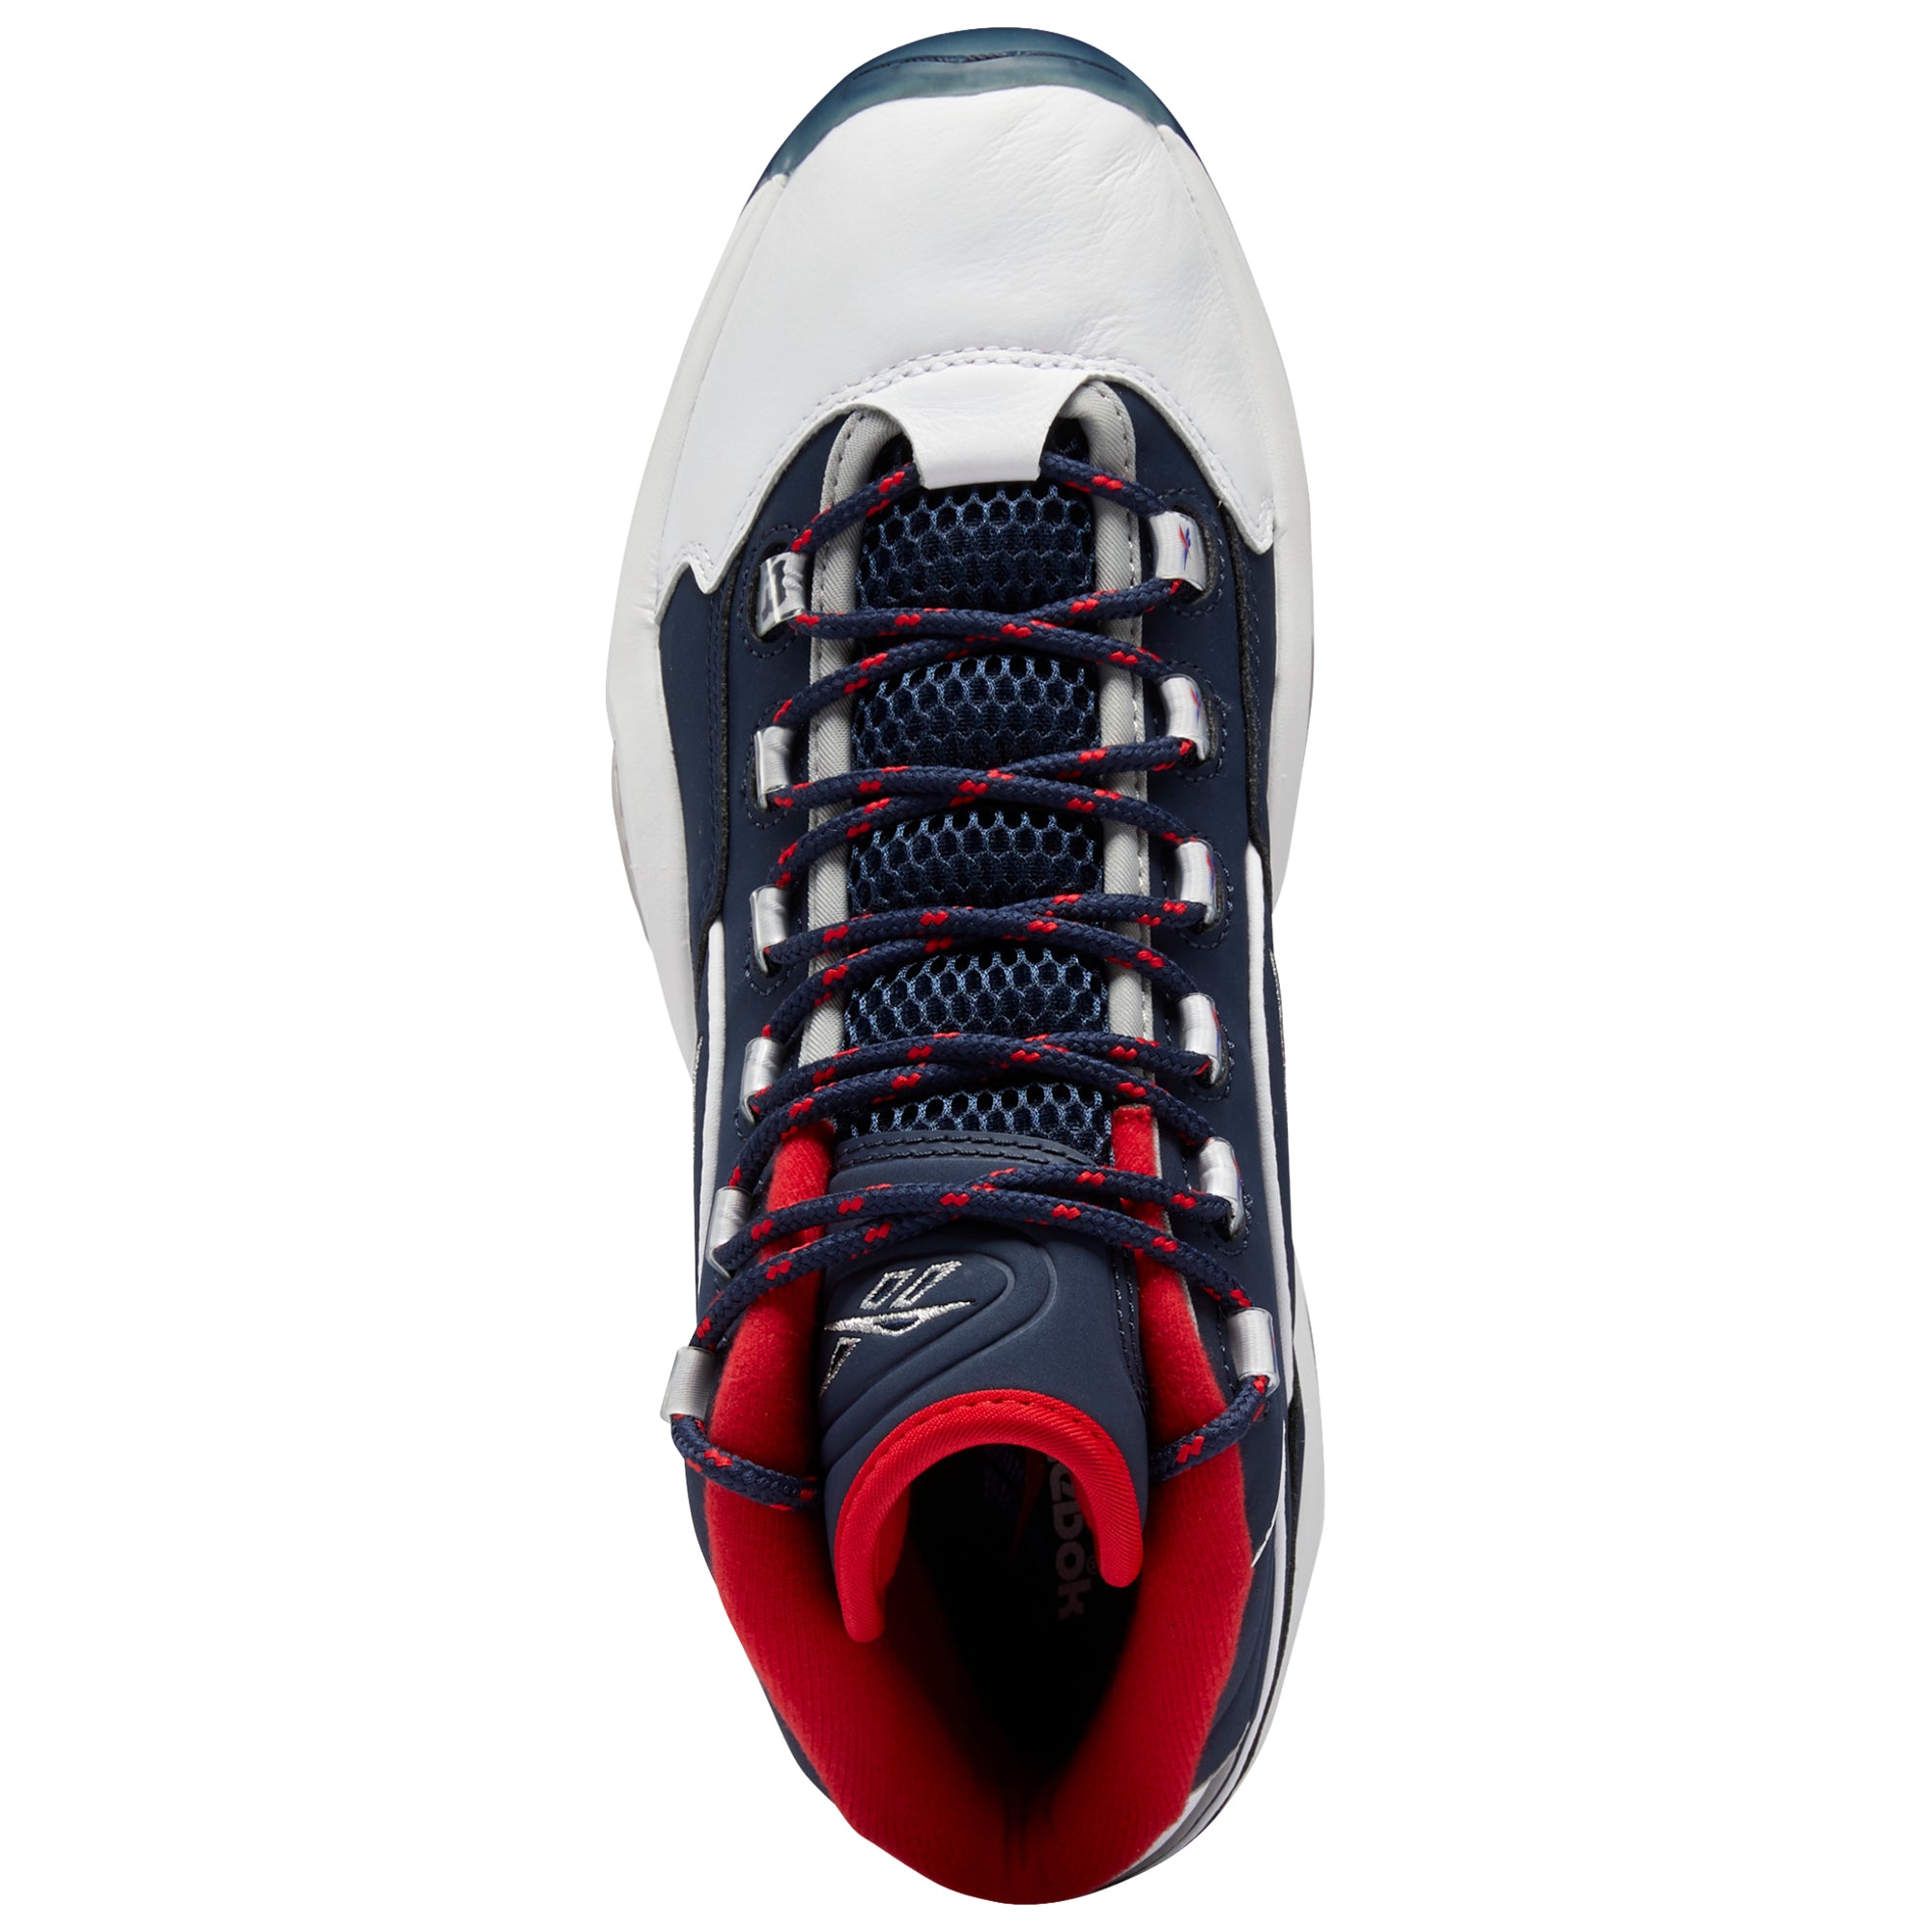 Reebok Tennis Shoes - Iverson Four Olympics